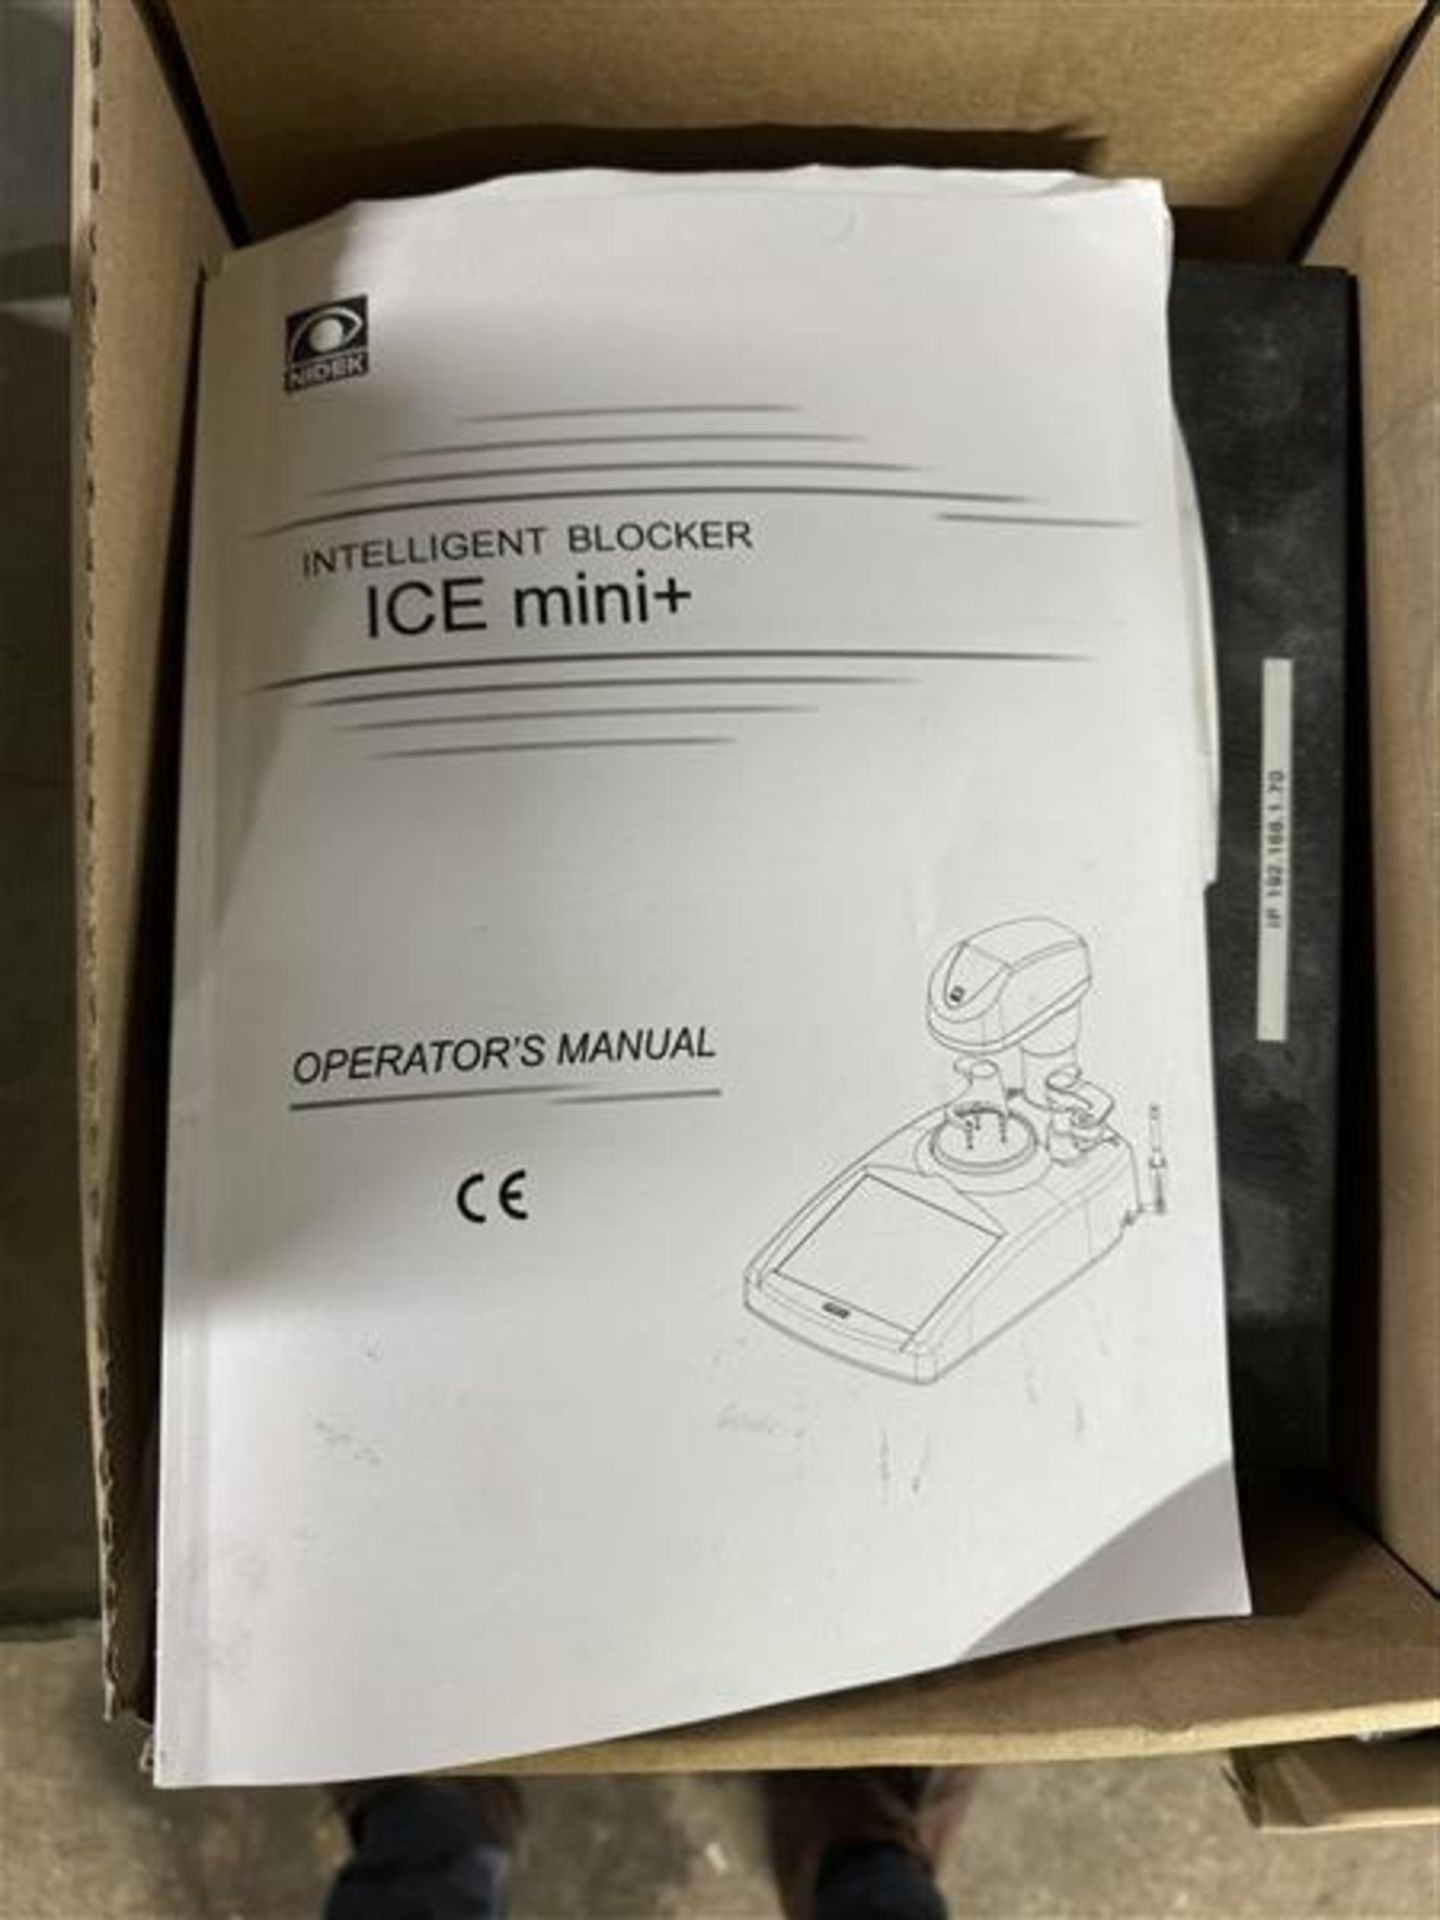 Nidek Ice Mini + intelligence blocker - Image 5 of 6